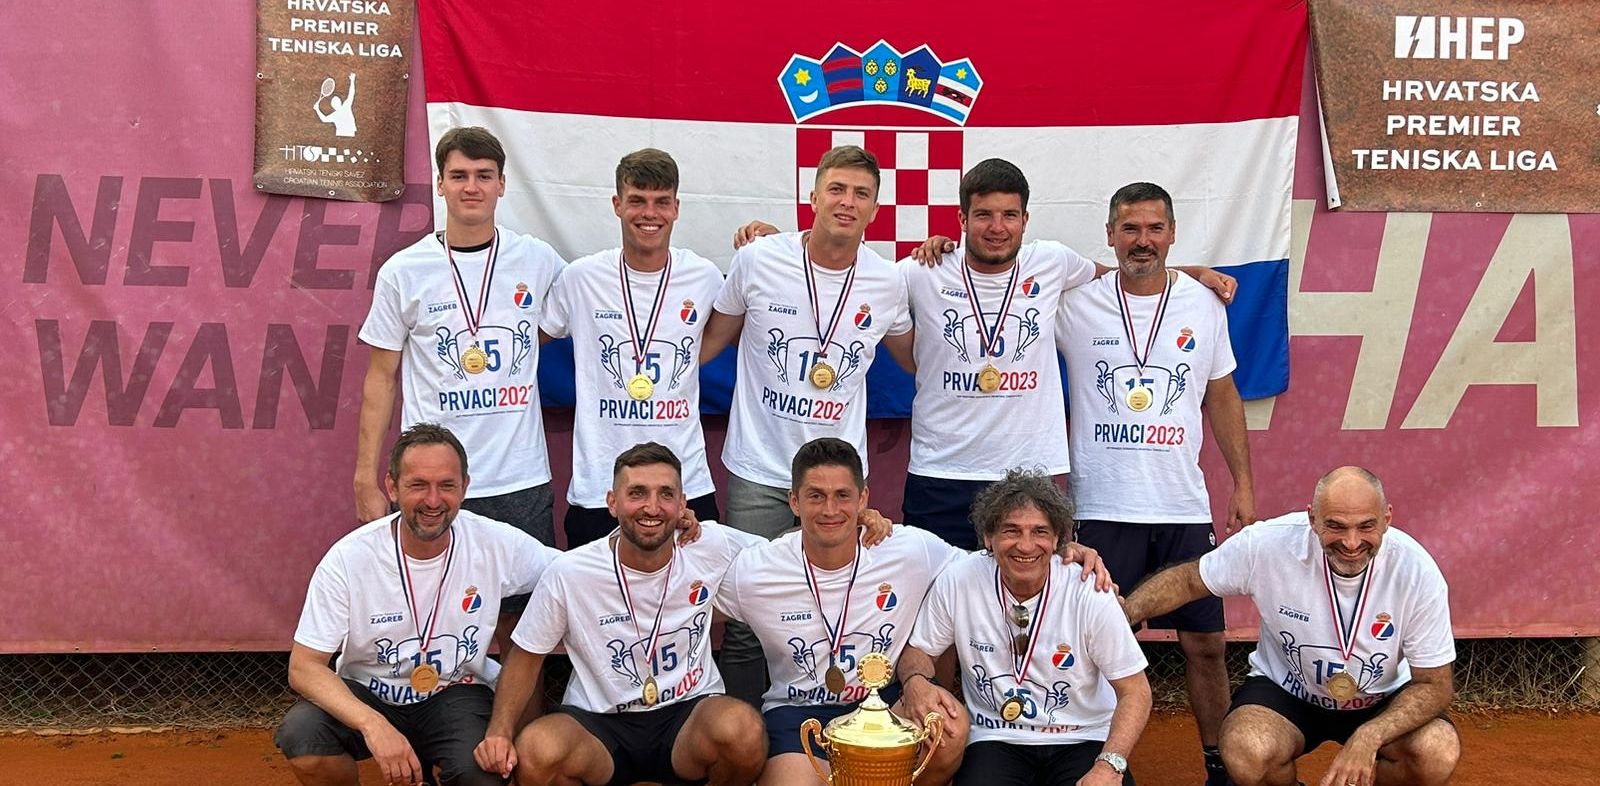 Tenisači HTK Zagreba pobjednici HEP Premijer seniorske lige, osvojili sedmi uzastopni naslov!